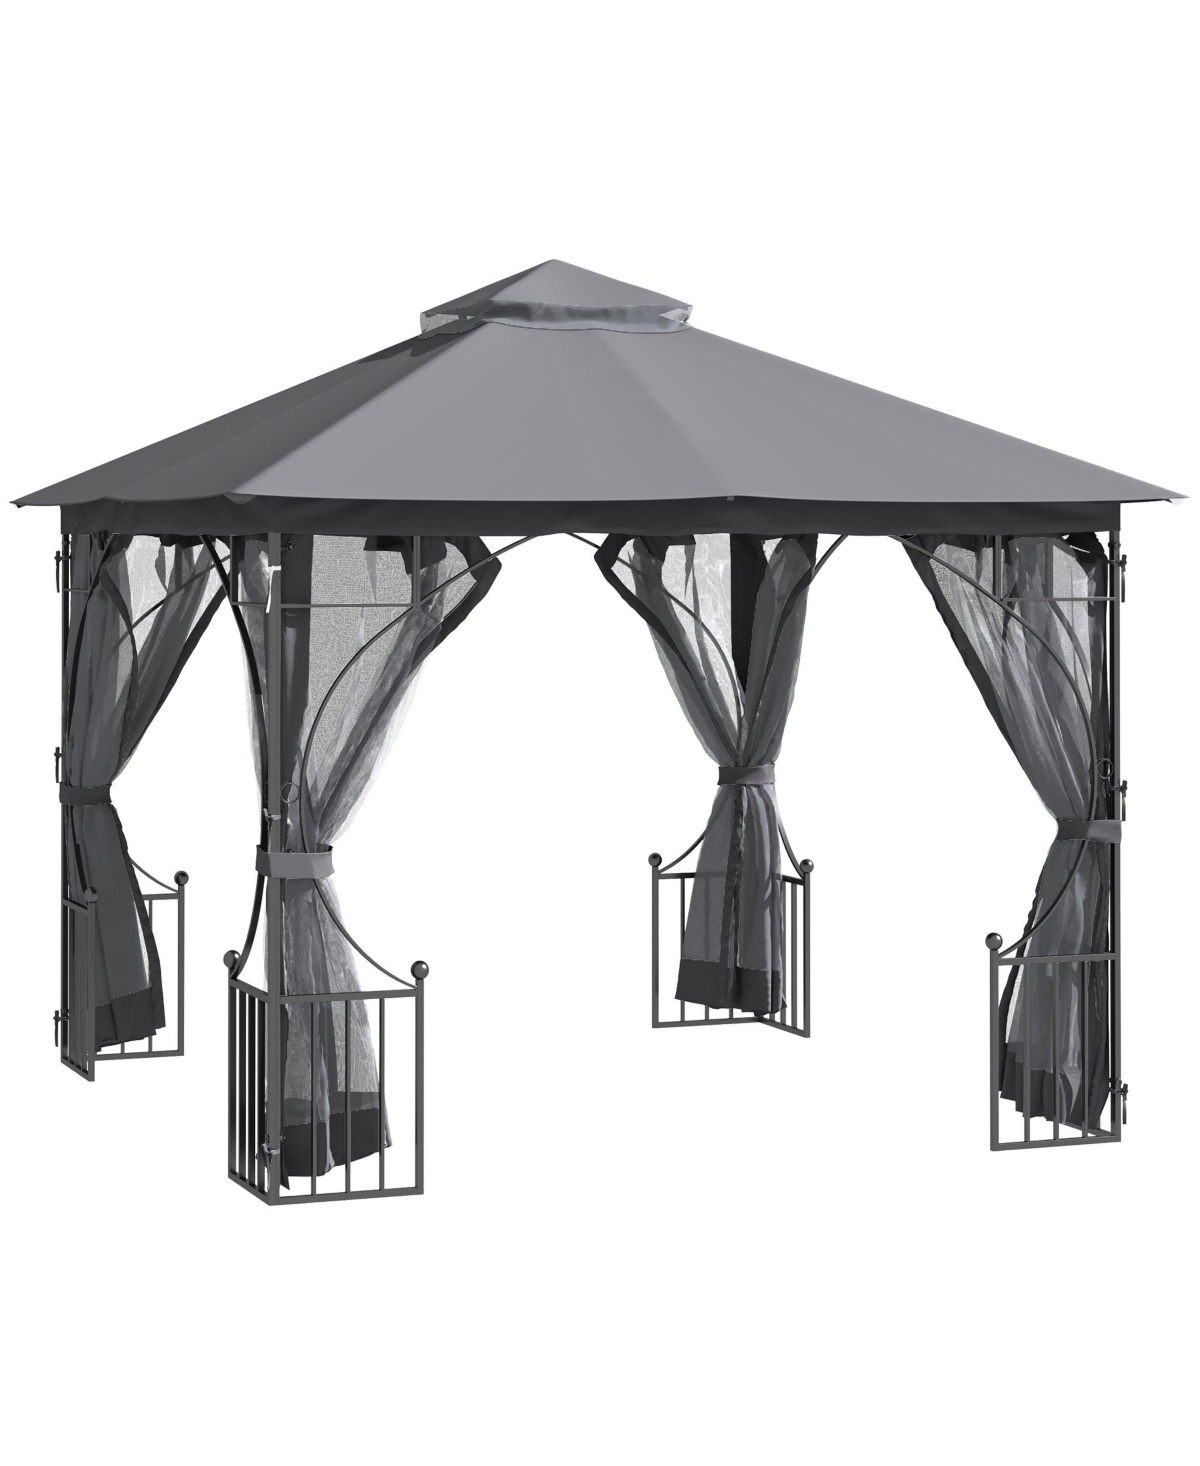 10' x 10' Patio Gazebo, Outdoor Canopy Pavilion with Mesh Netting Sidewalls, 2-Tier Polyester Roof, & Steel Frame, Dark Grey - Dark grey